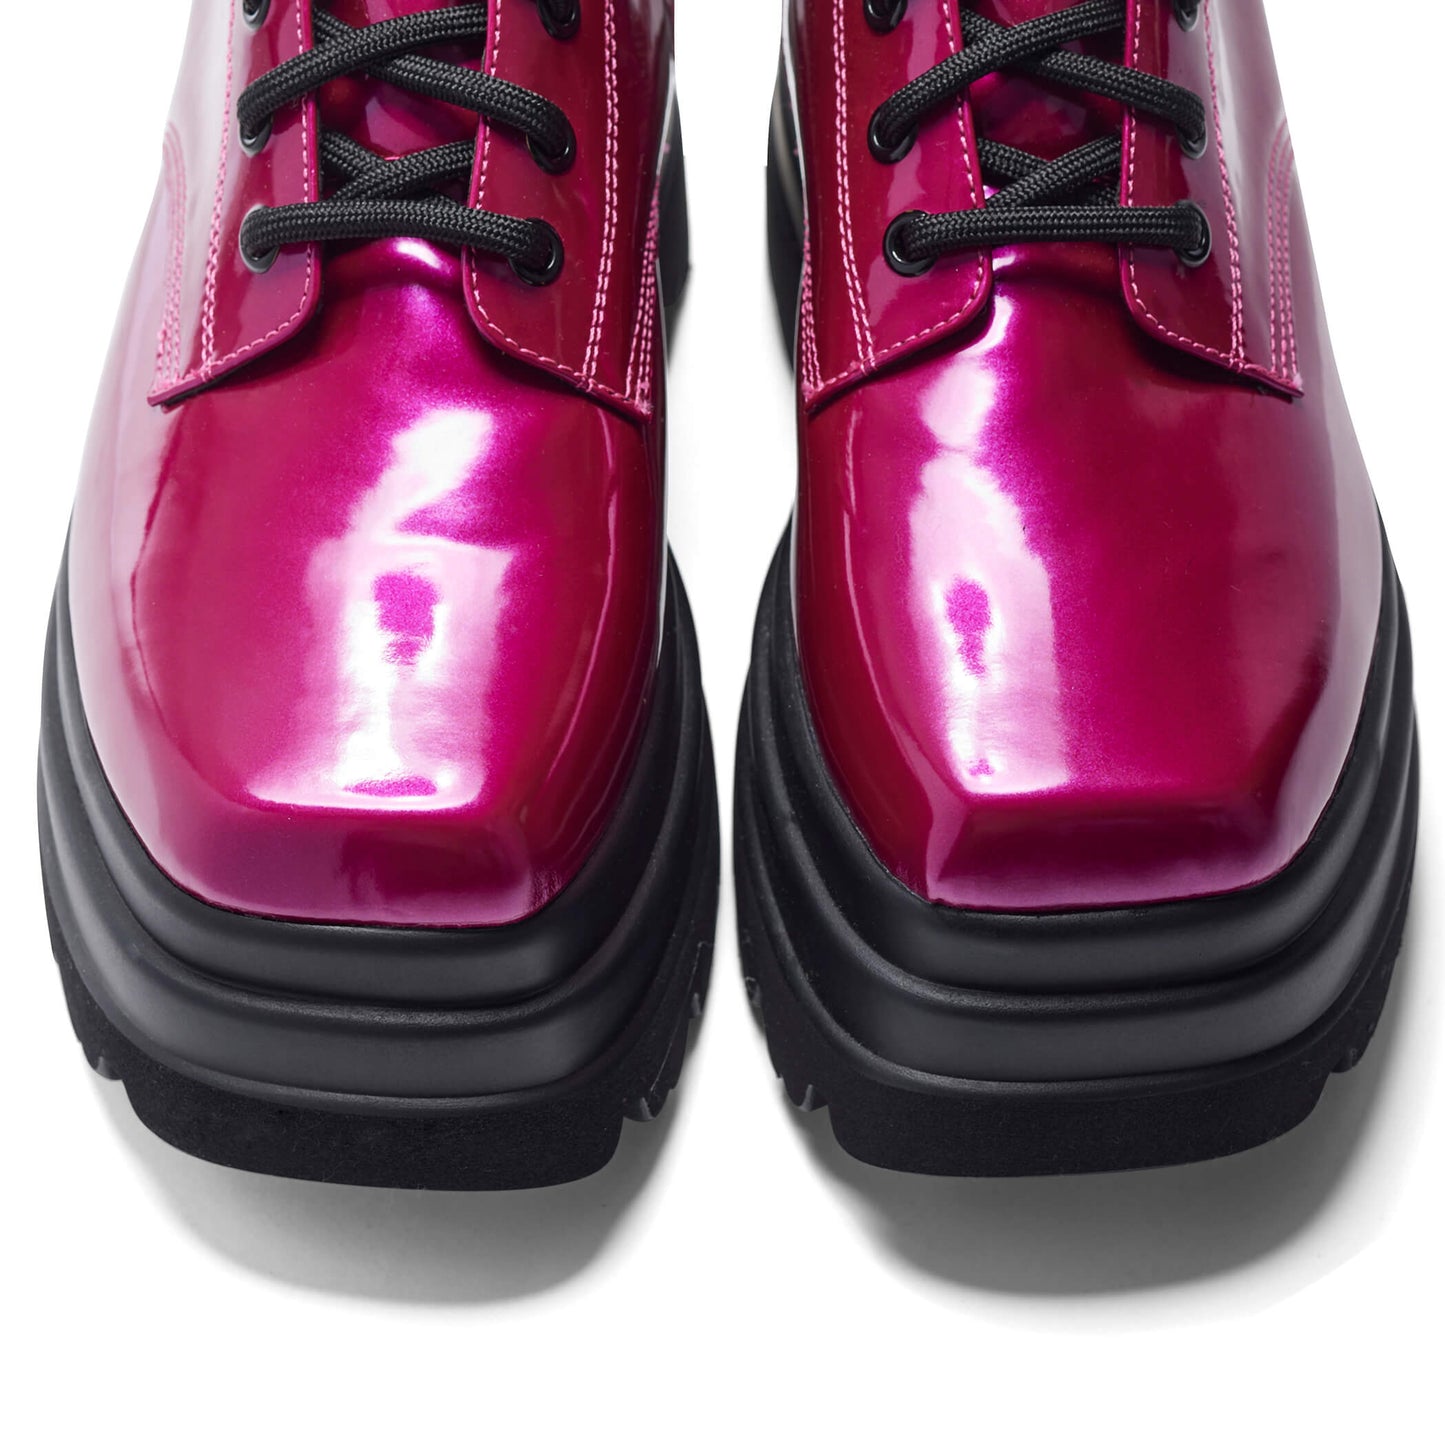 Deathwatch Trident Platform Boots - Candy Pink - KOI Footwear - Front Detail View